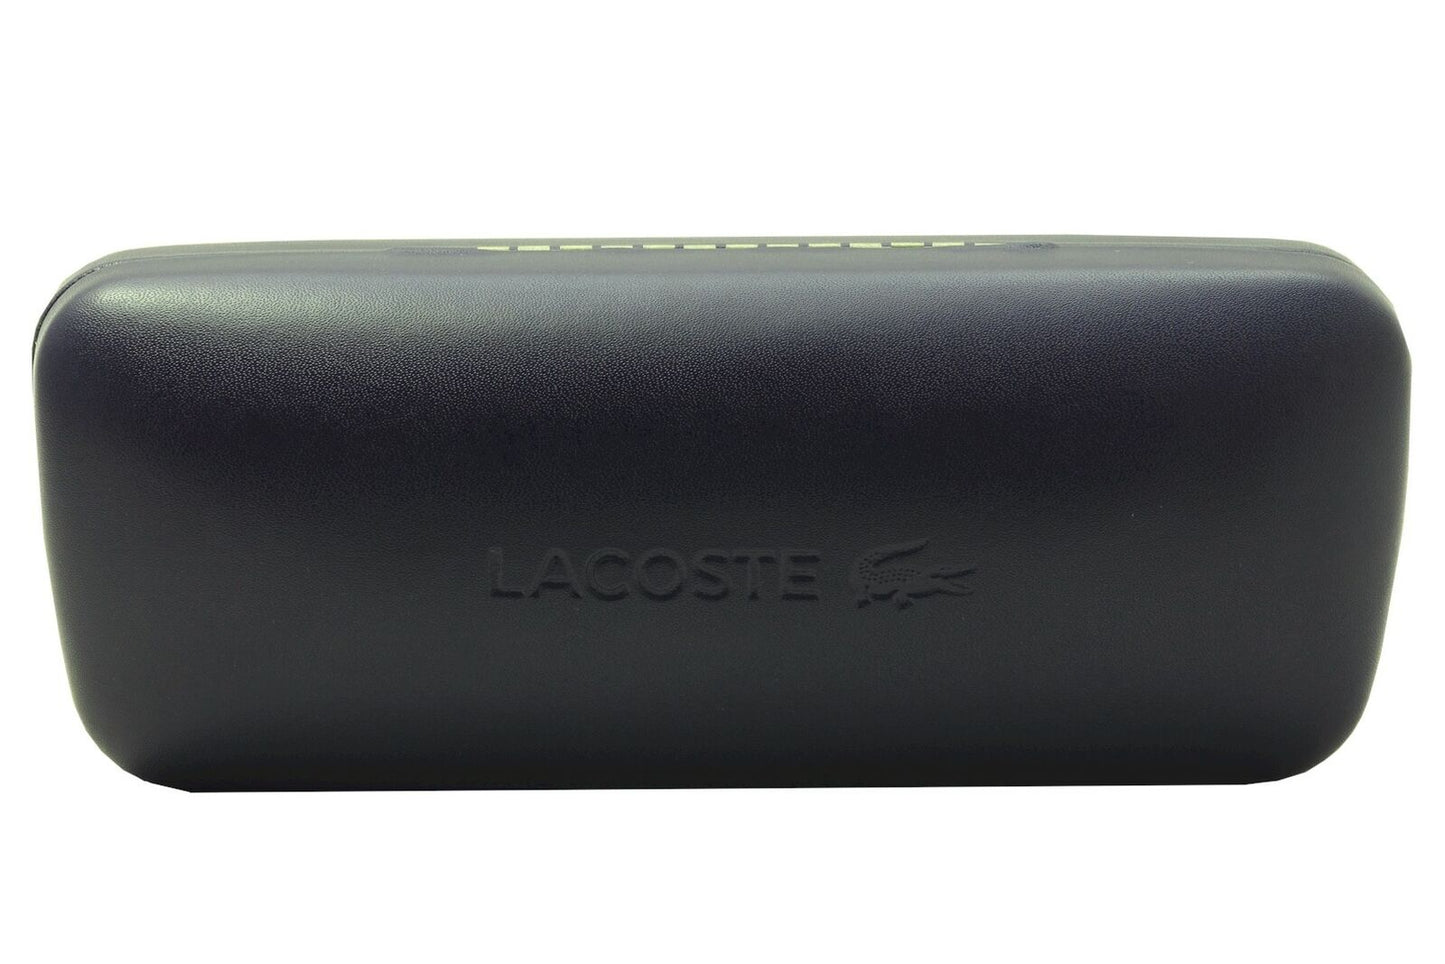 Lacoste L2217G-001-54 54mm New Eyeglasses